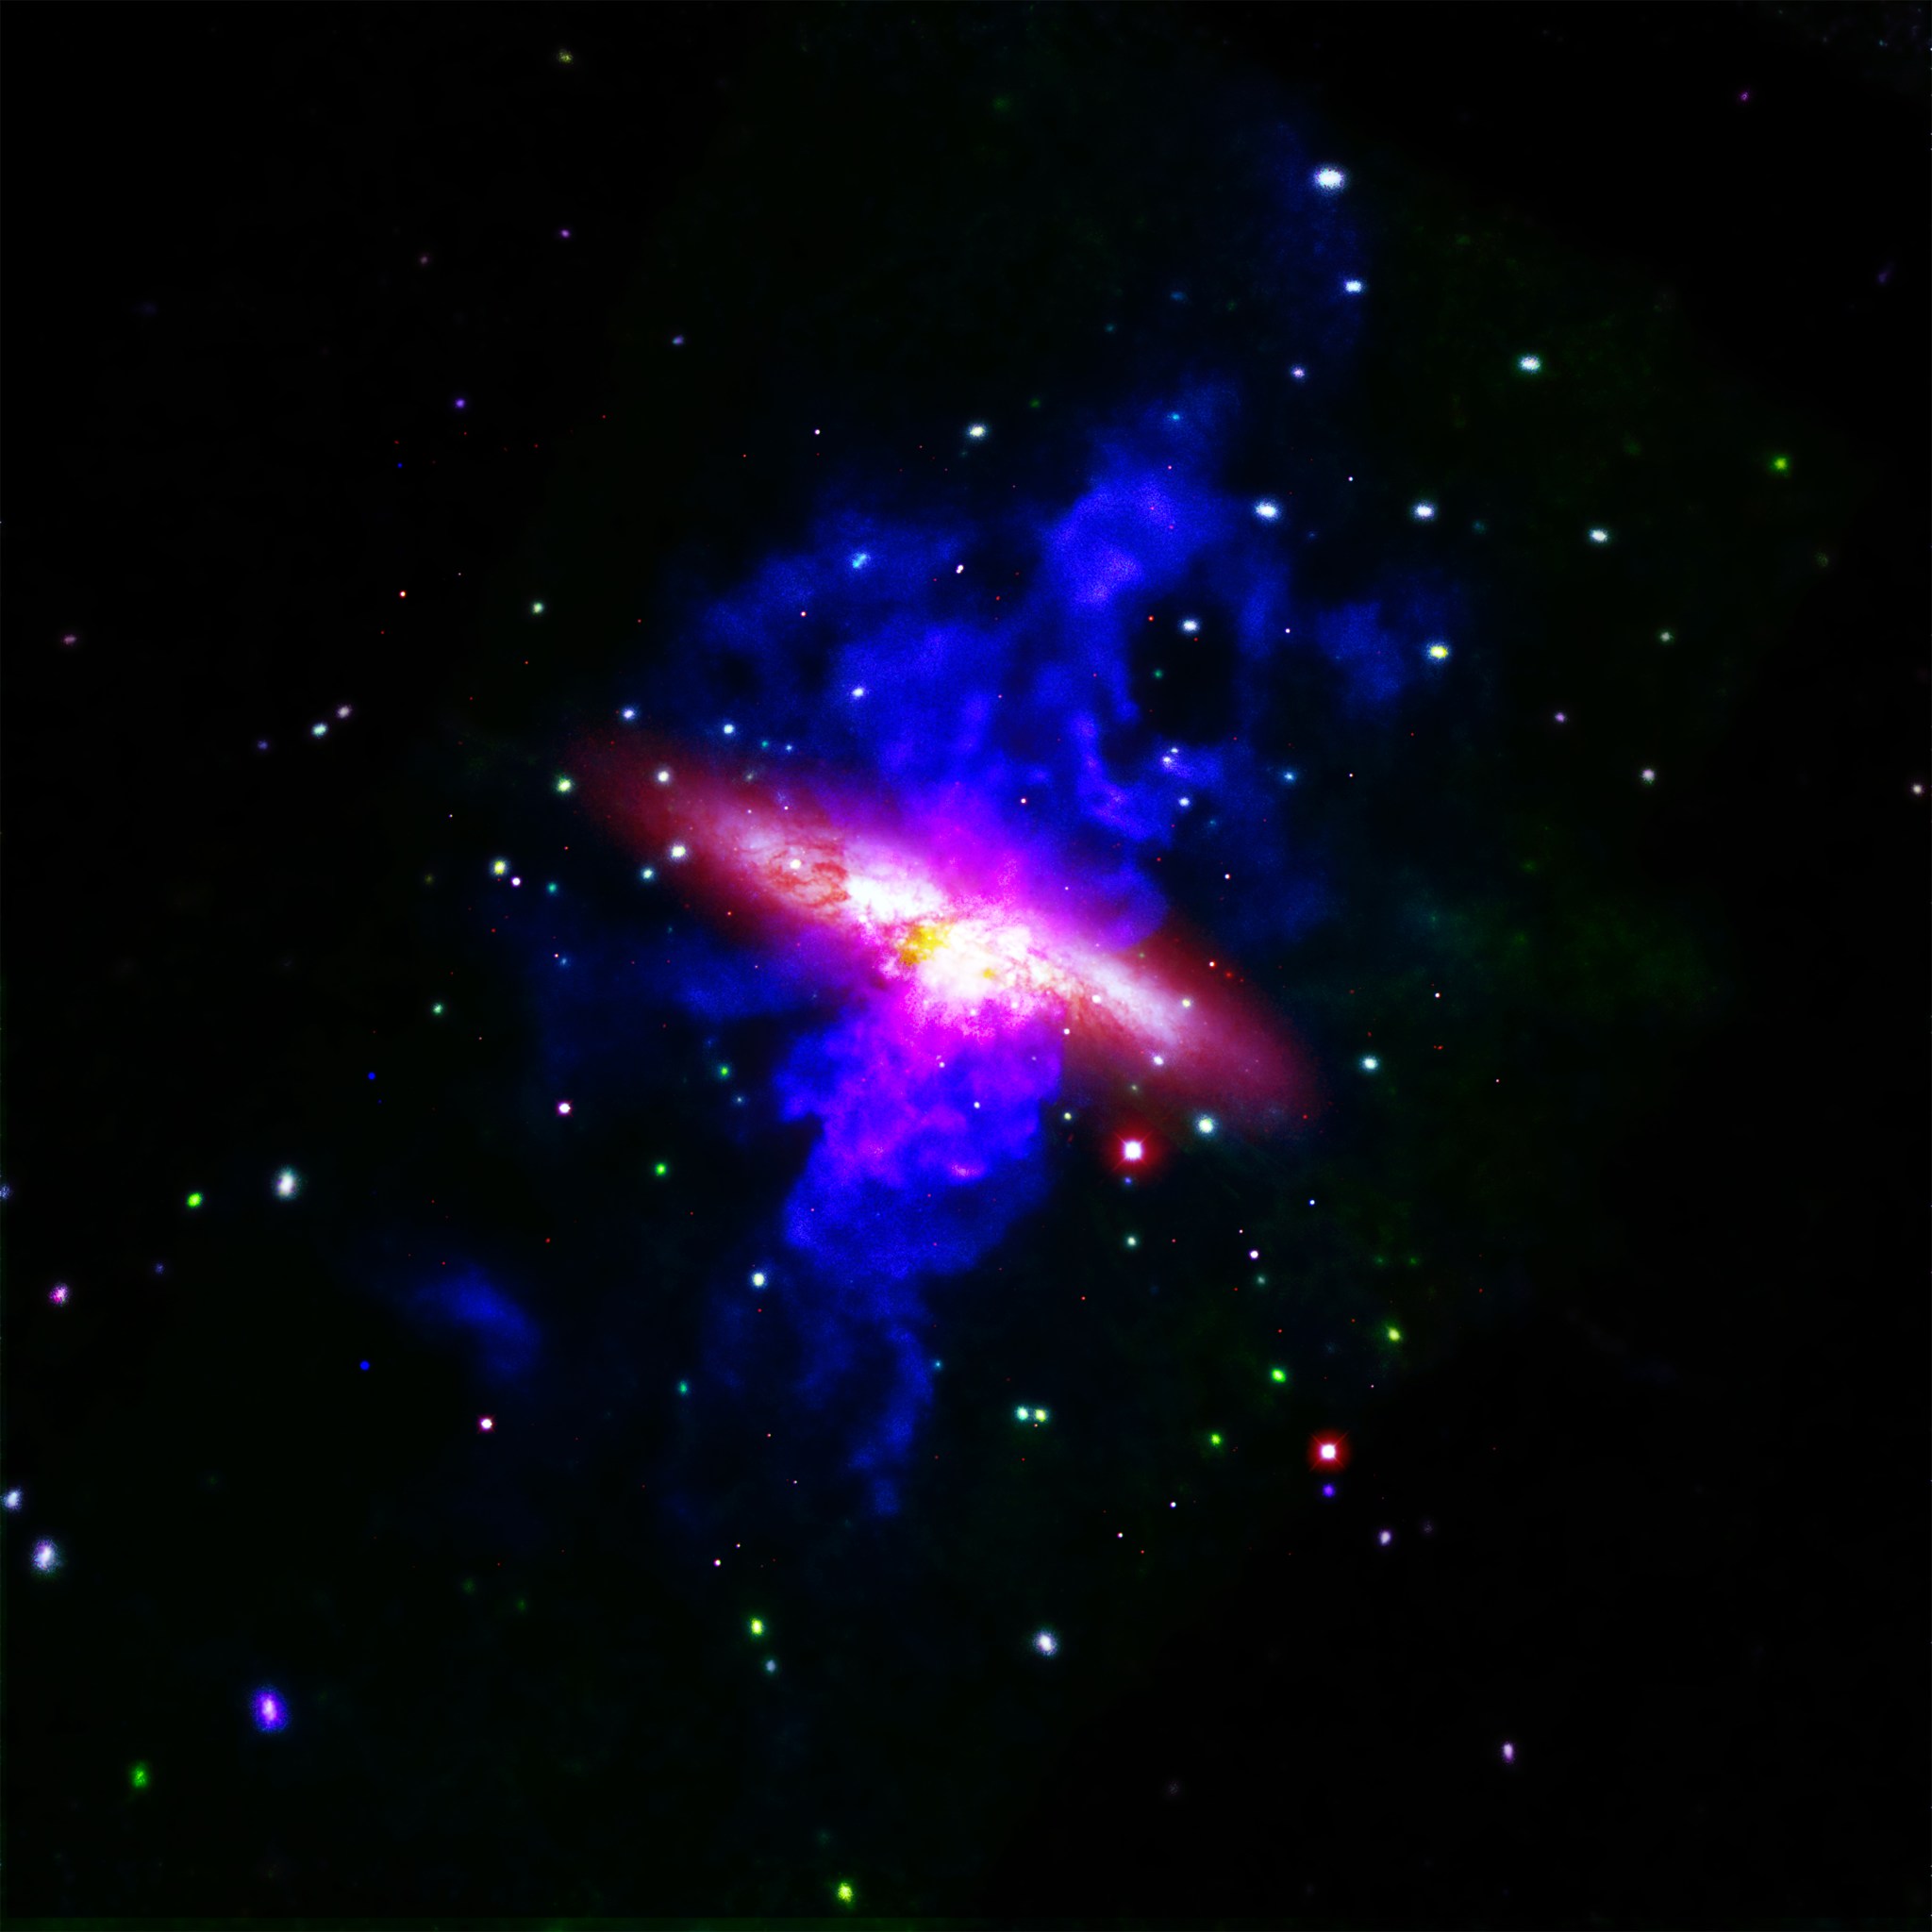 Messier 82, or M82, galaxy